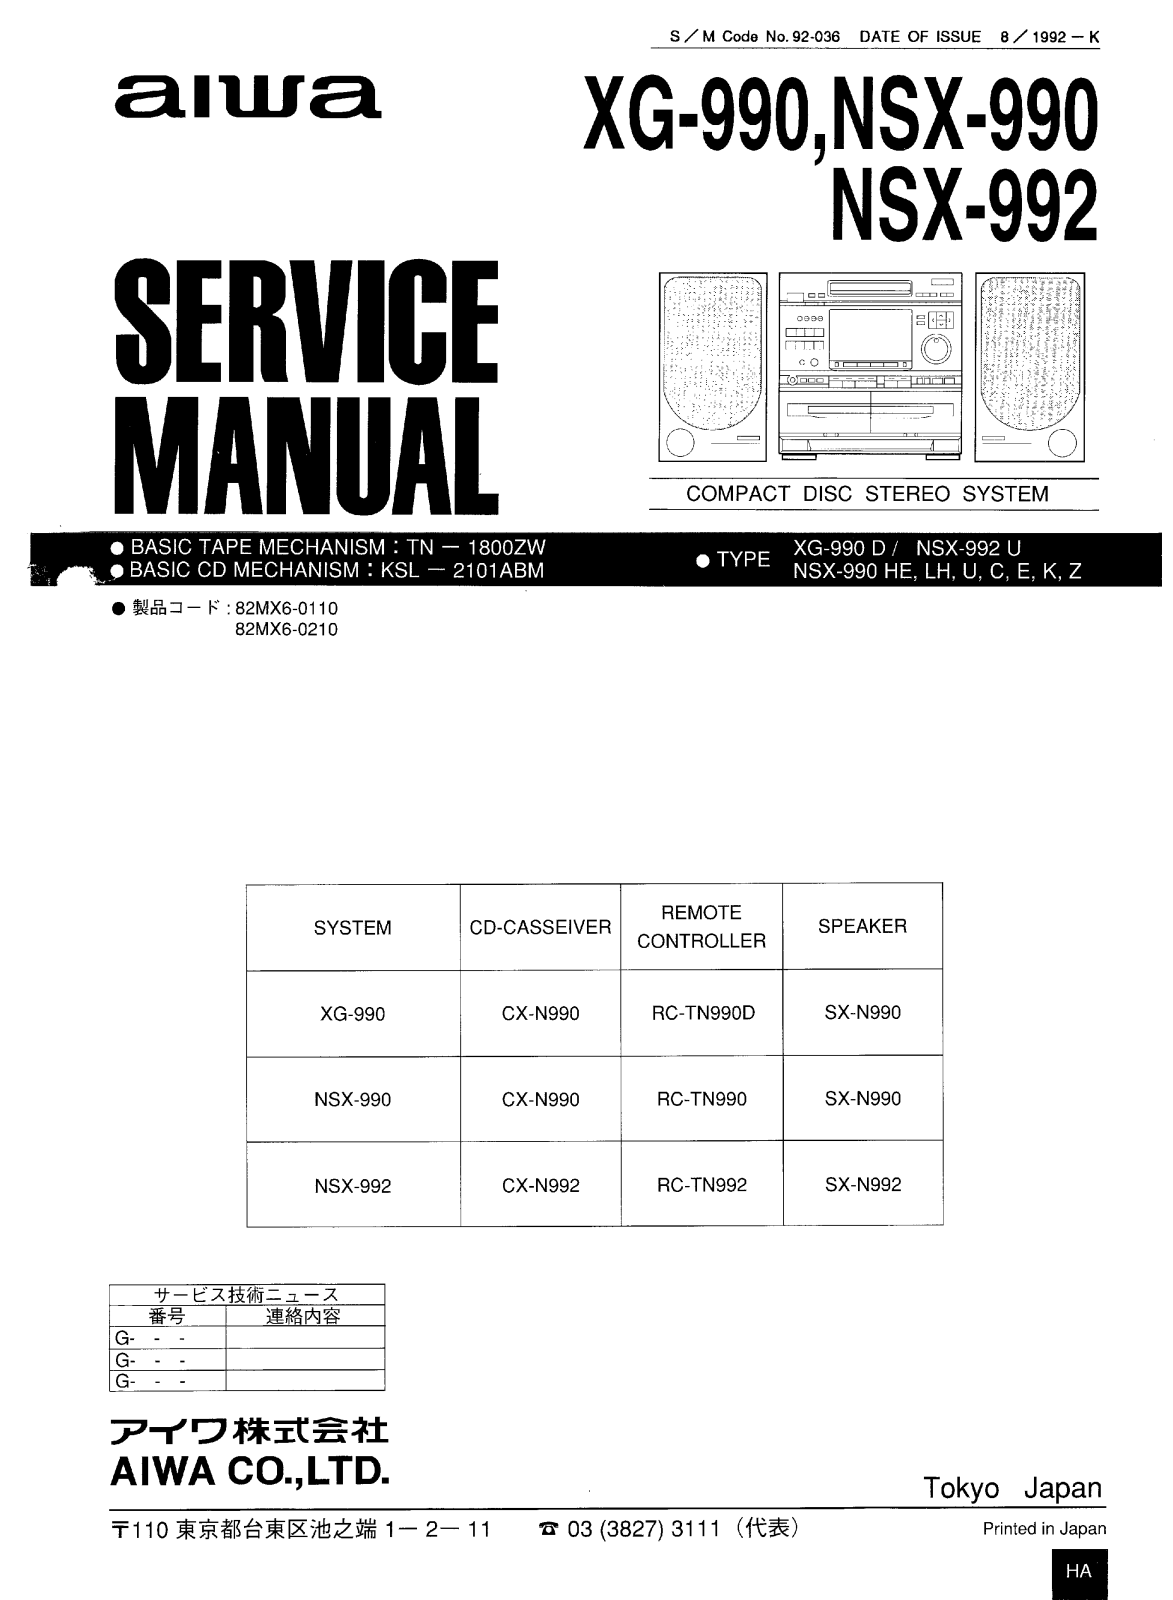 Aiwa CX N990, NSX 990, NSX 992 Service Manual